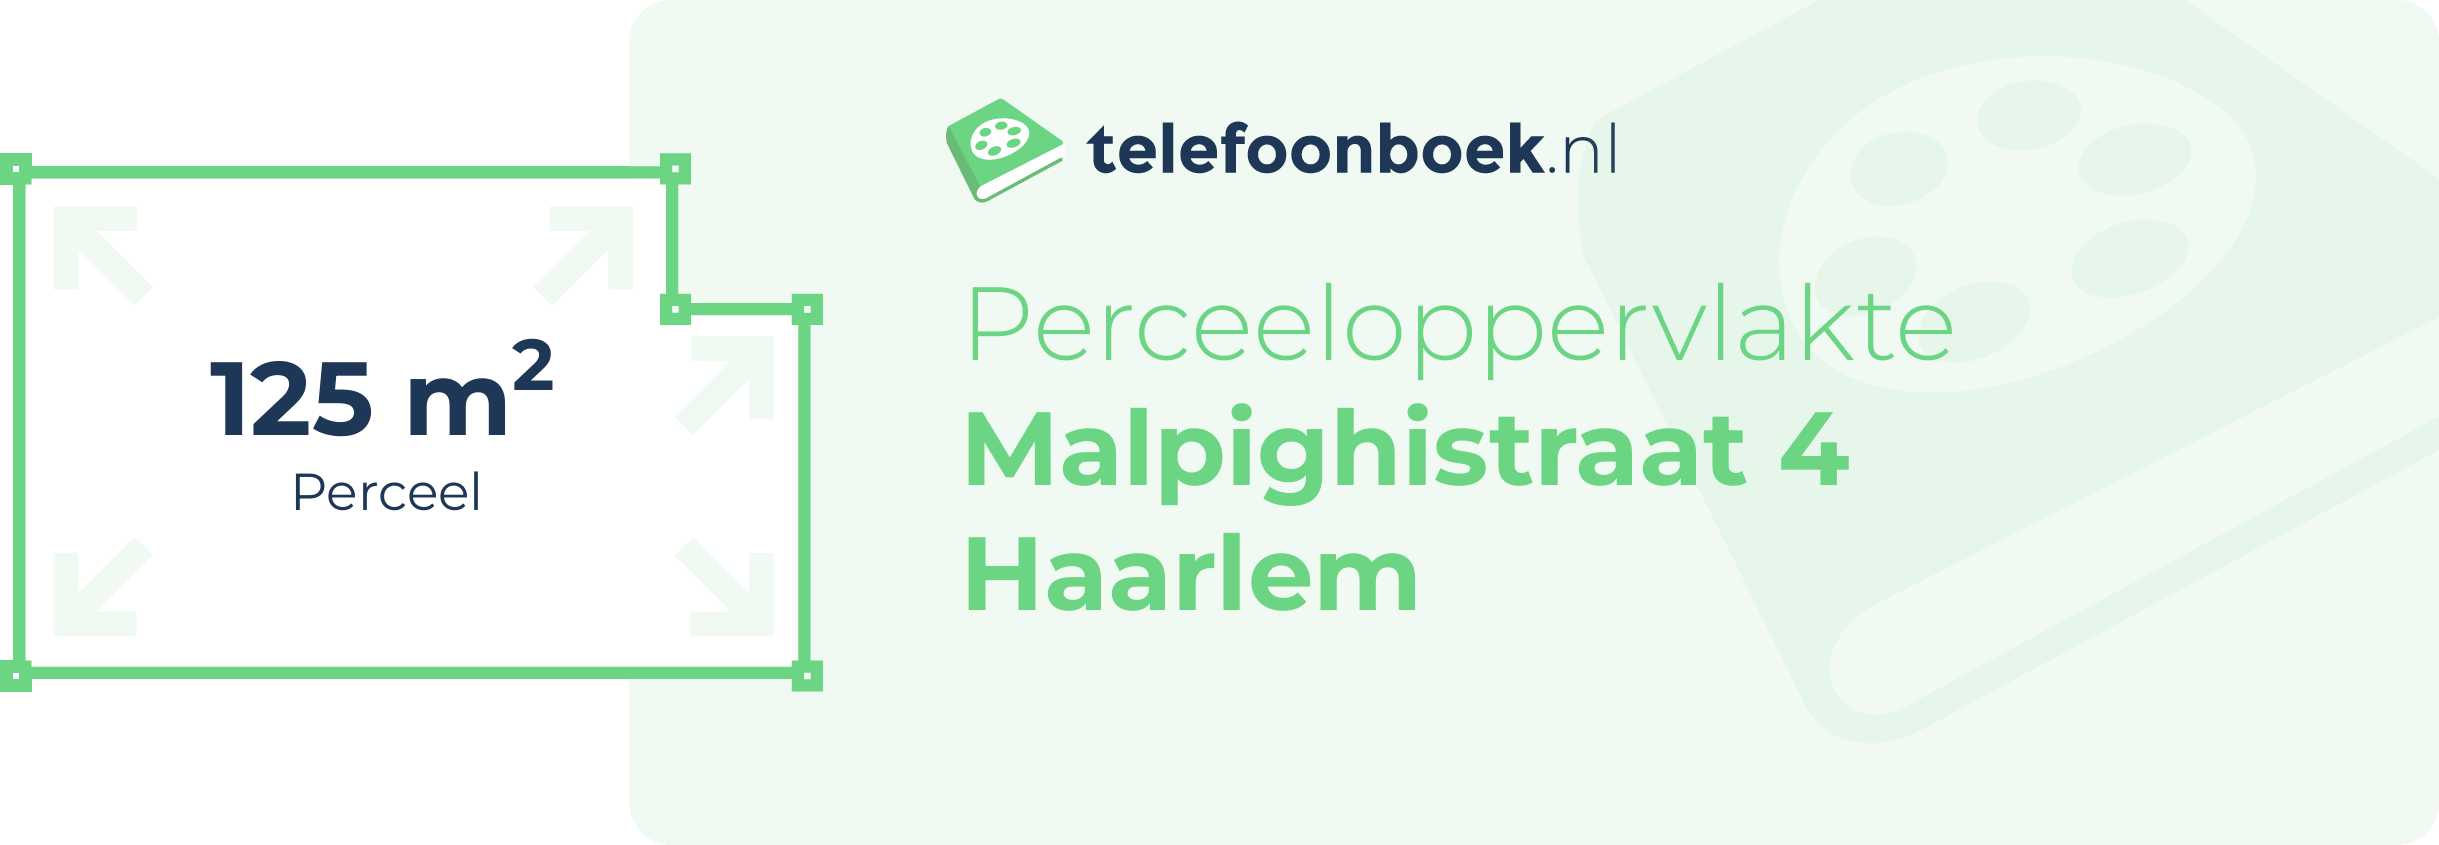 Perceeloppervlakte Malpighistraat 4 Haarlem